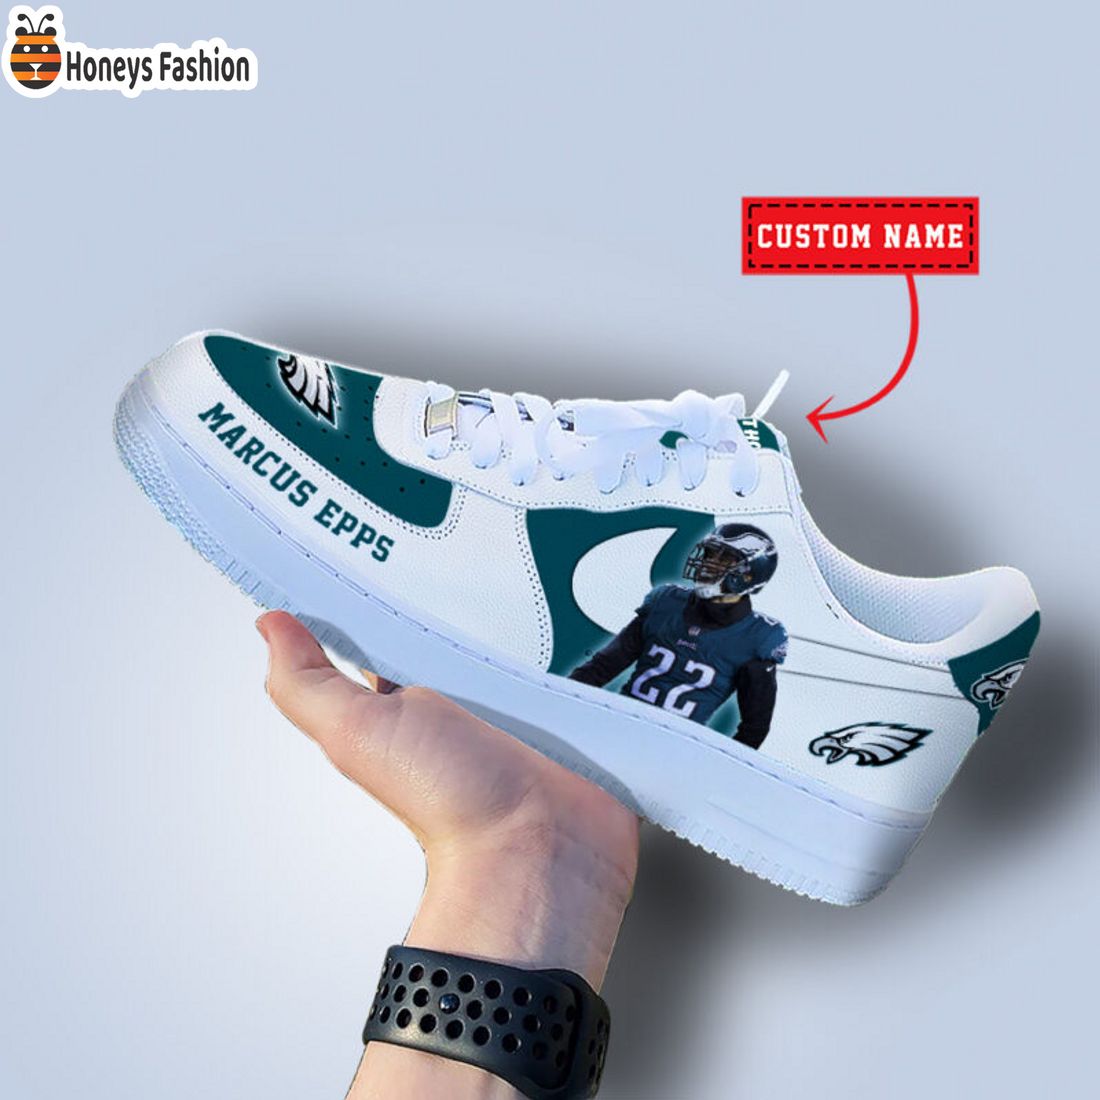 TOP SELLER Marcus Epps Philadelphia Eagles NFL Custom Name Nike Air Force Shoes